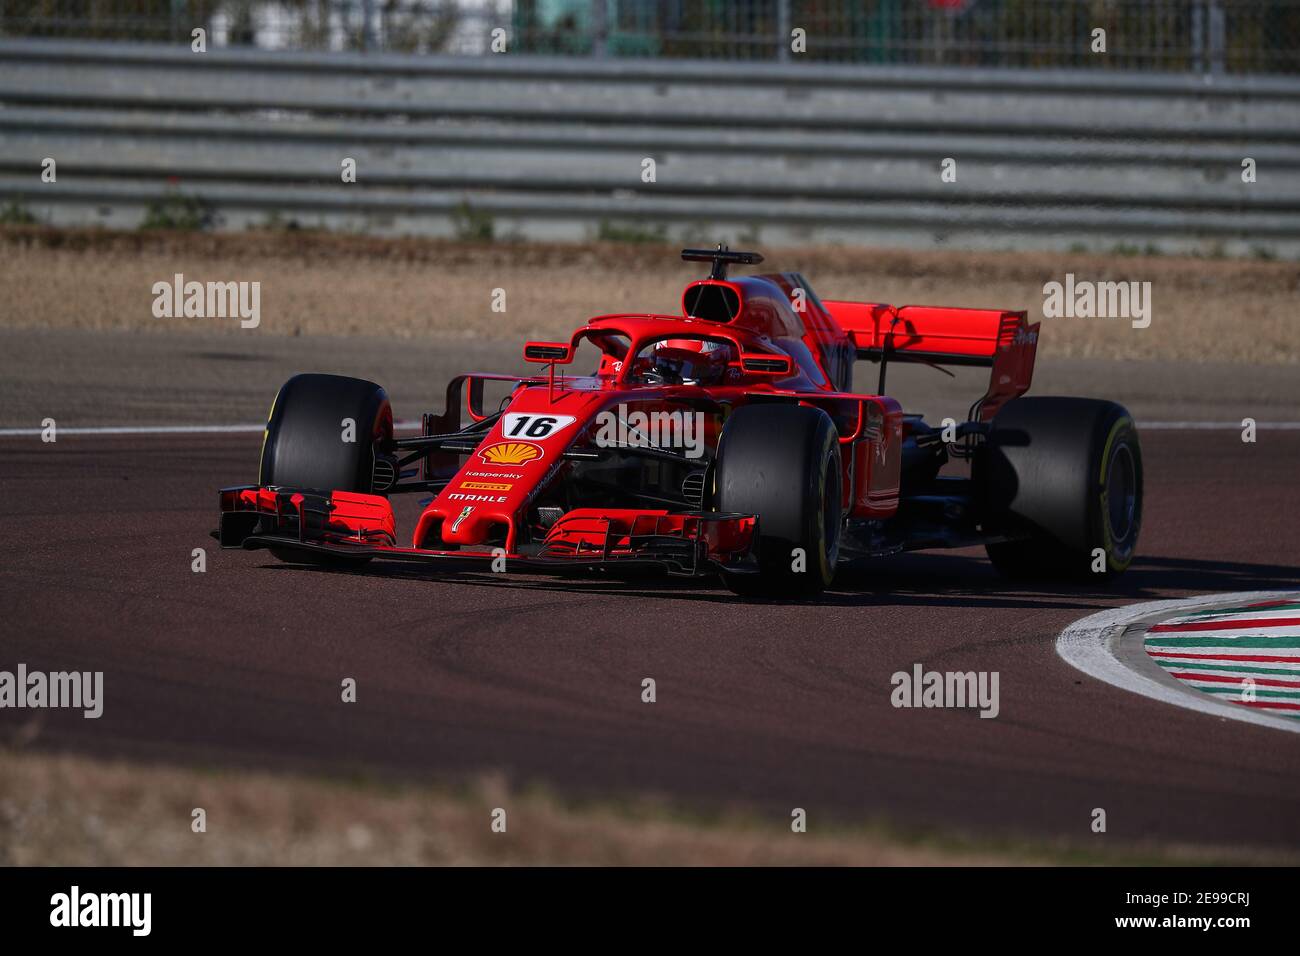 #16 Charles Leclerc Ferrari Formula 1 World championship 2021, private testing with the SF71H for the 2021 season in Fiorano, Modena. Stock Photo